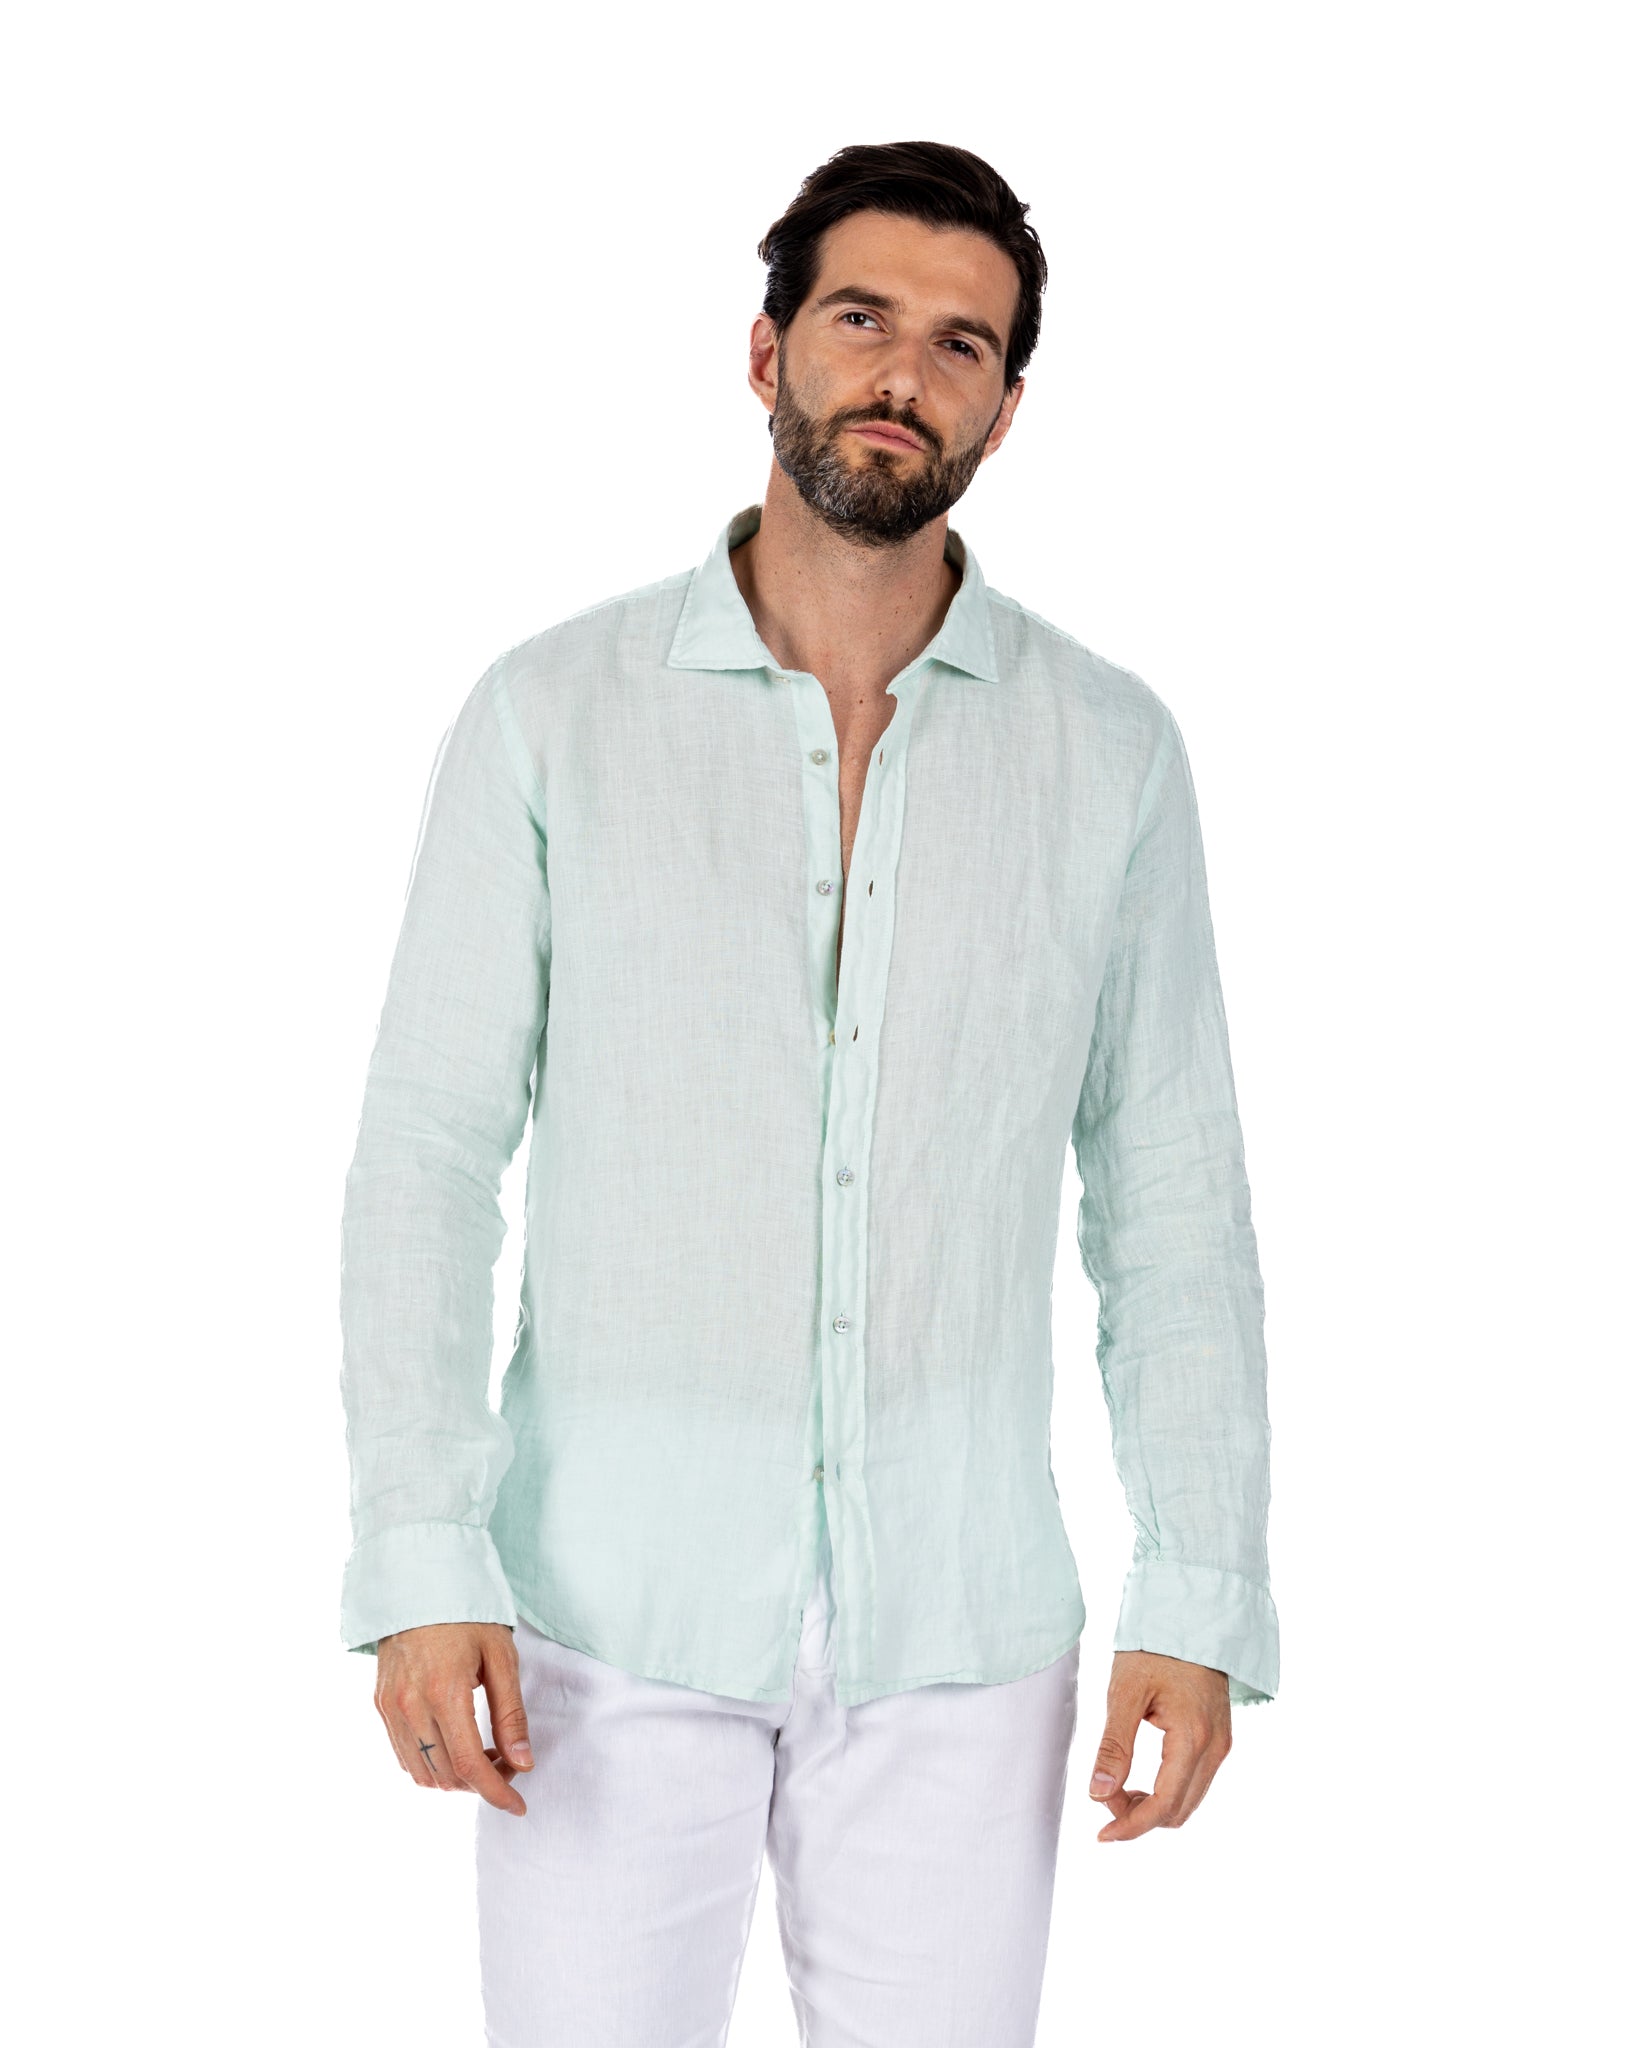 Montecarlo - teal pure linen shirt